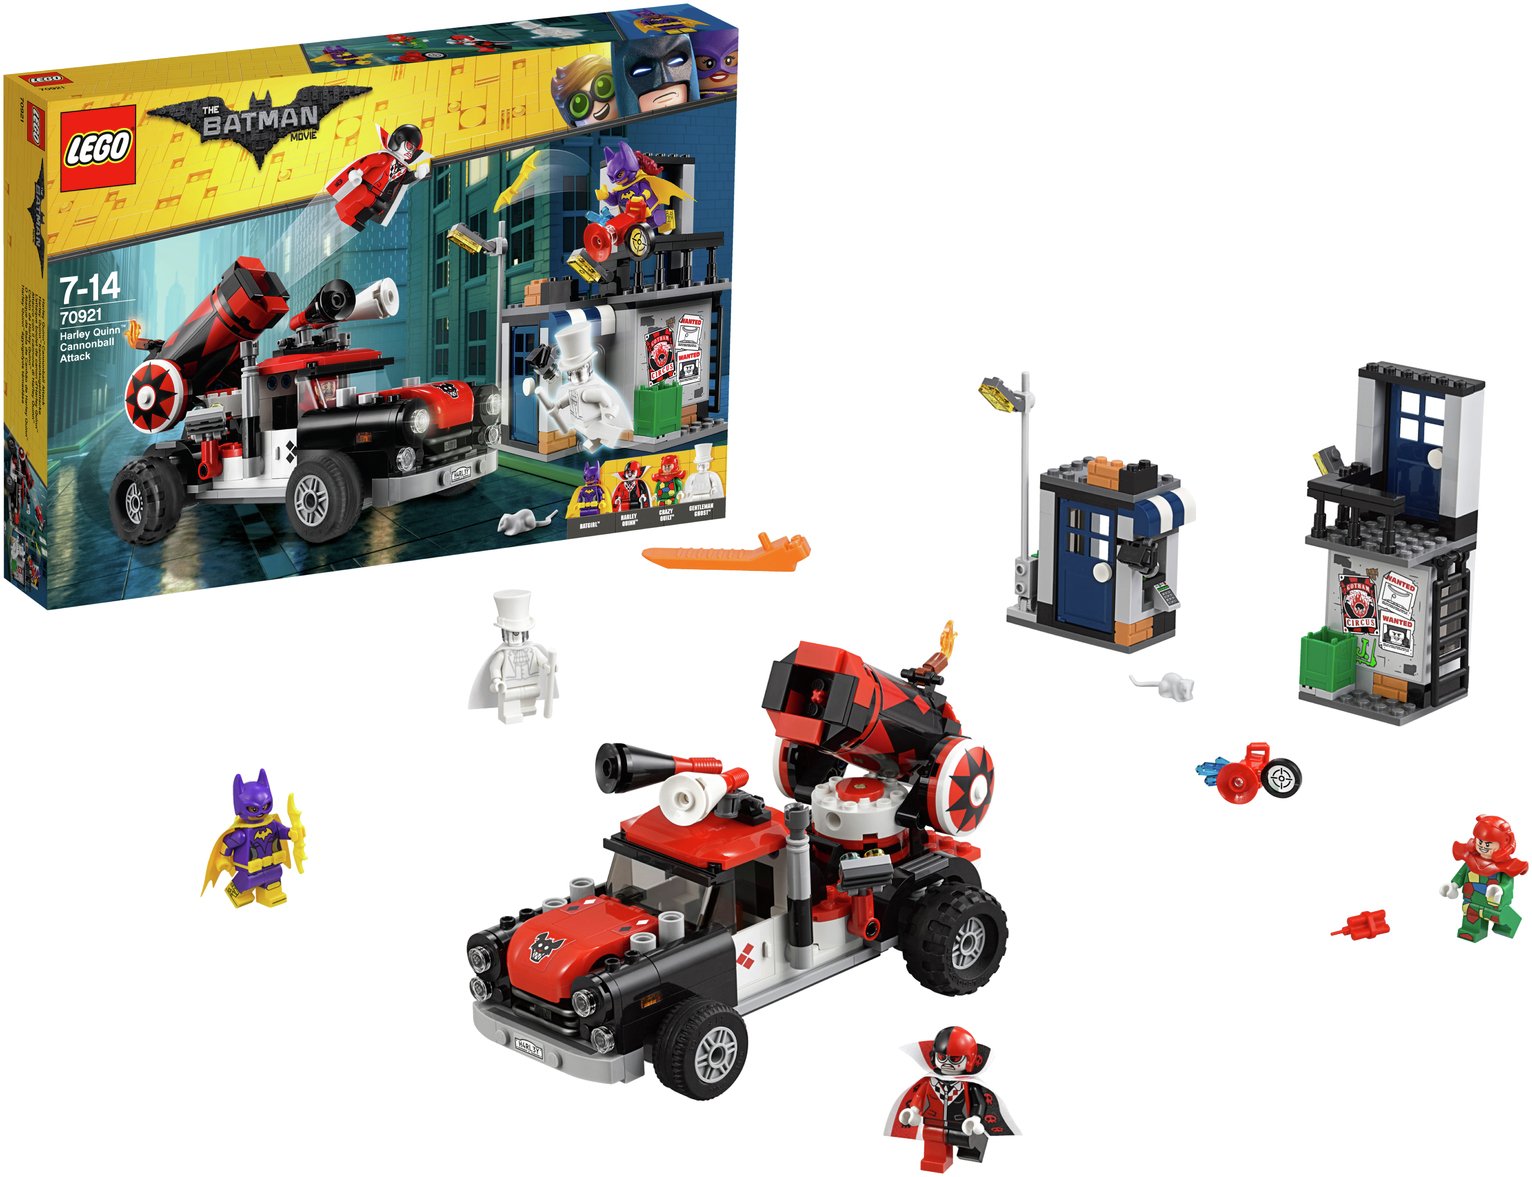 LEGO Batman Movie Harley Quinn Cannonball - 70921